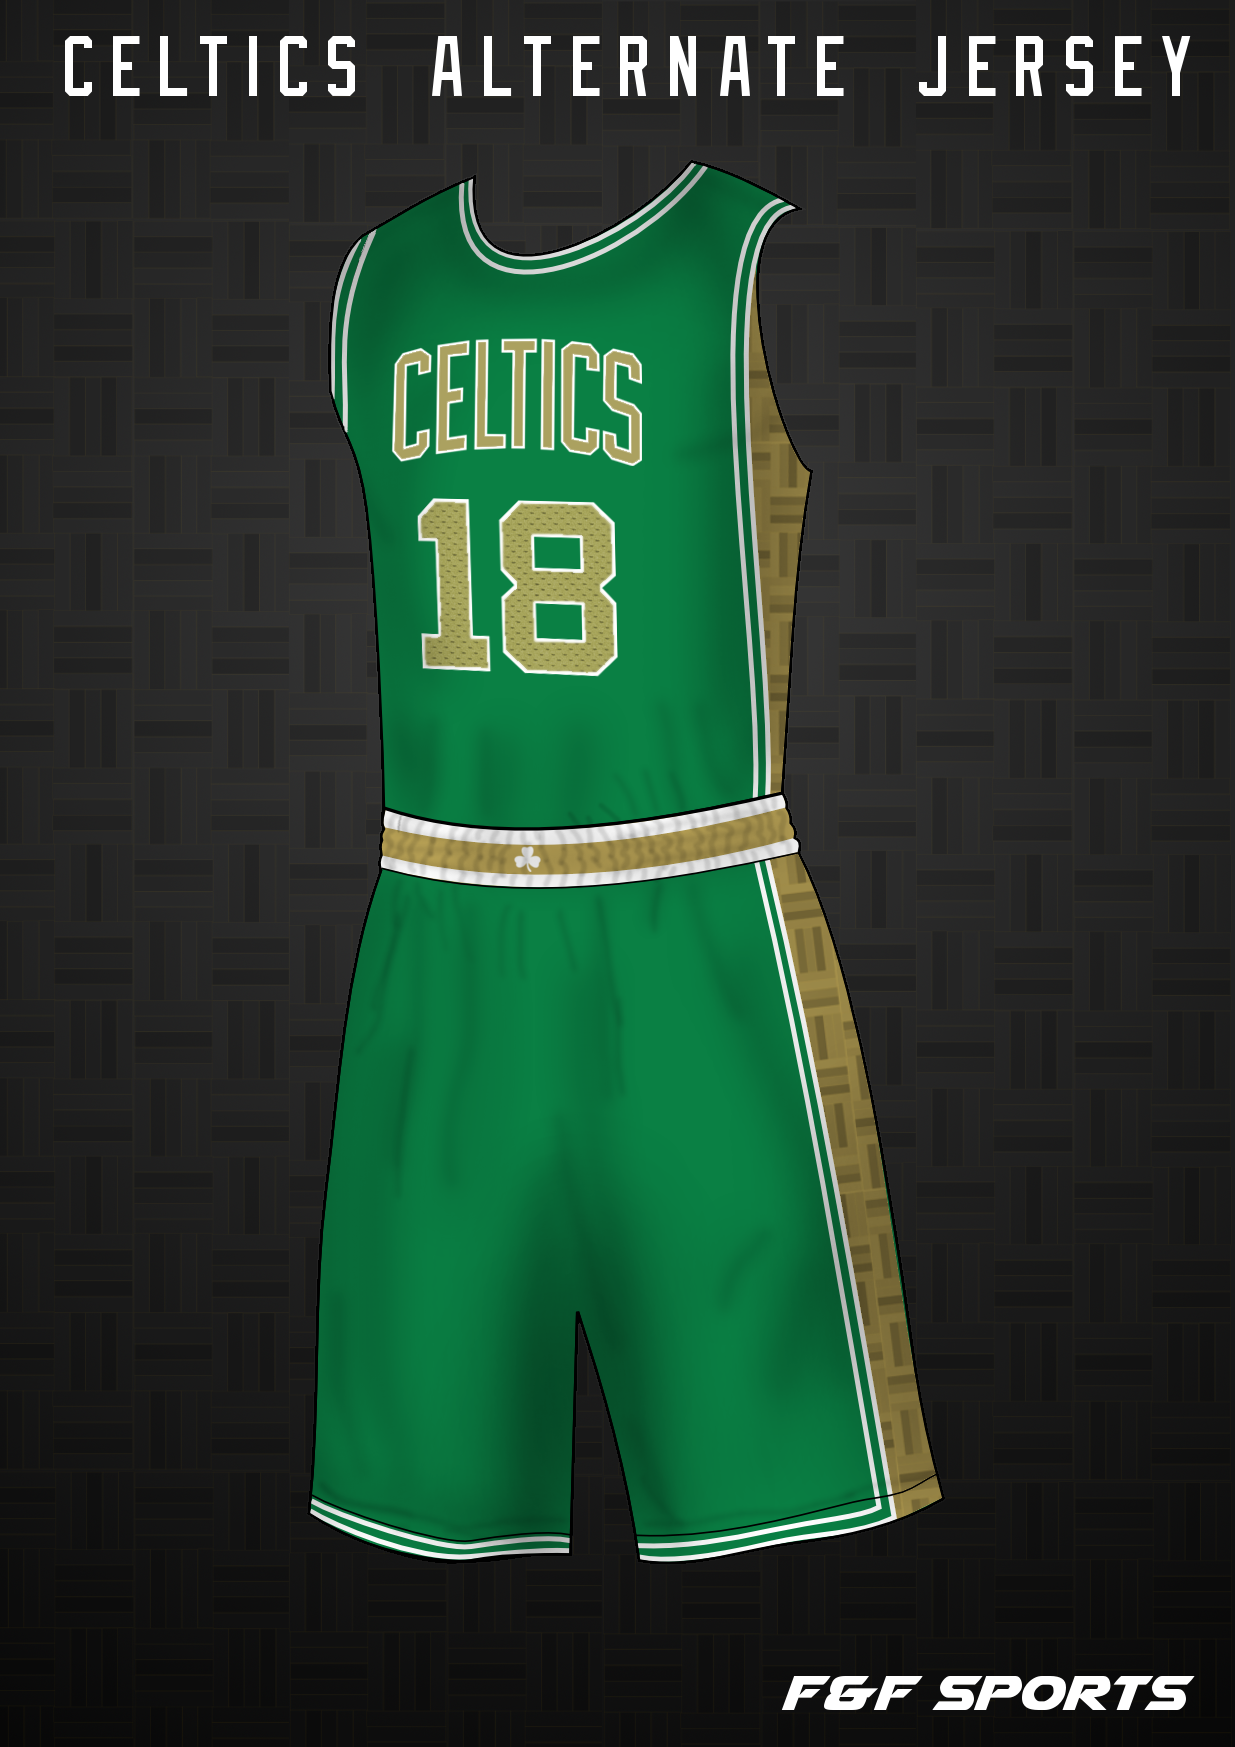 Boston Celtics Alternate Jersey Concept - Concepts - Chris Creamer's Sports Logos ...1235 x 1747